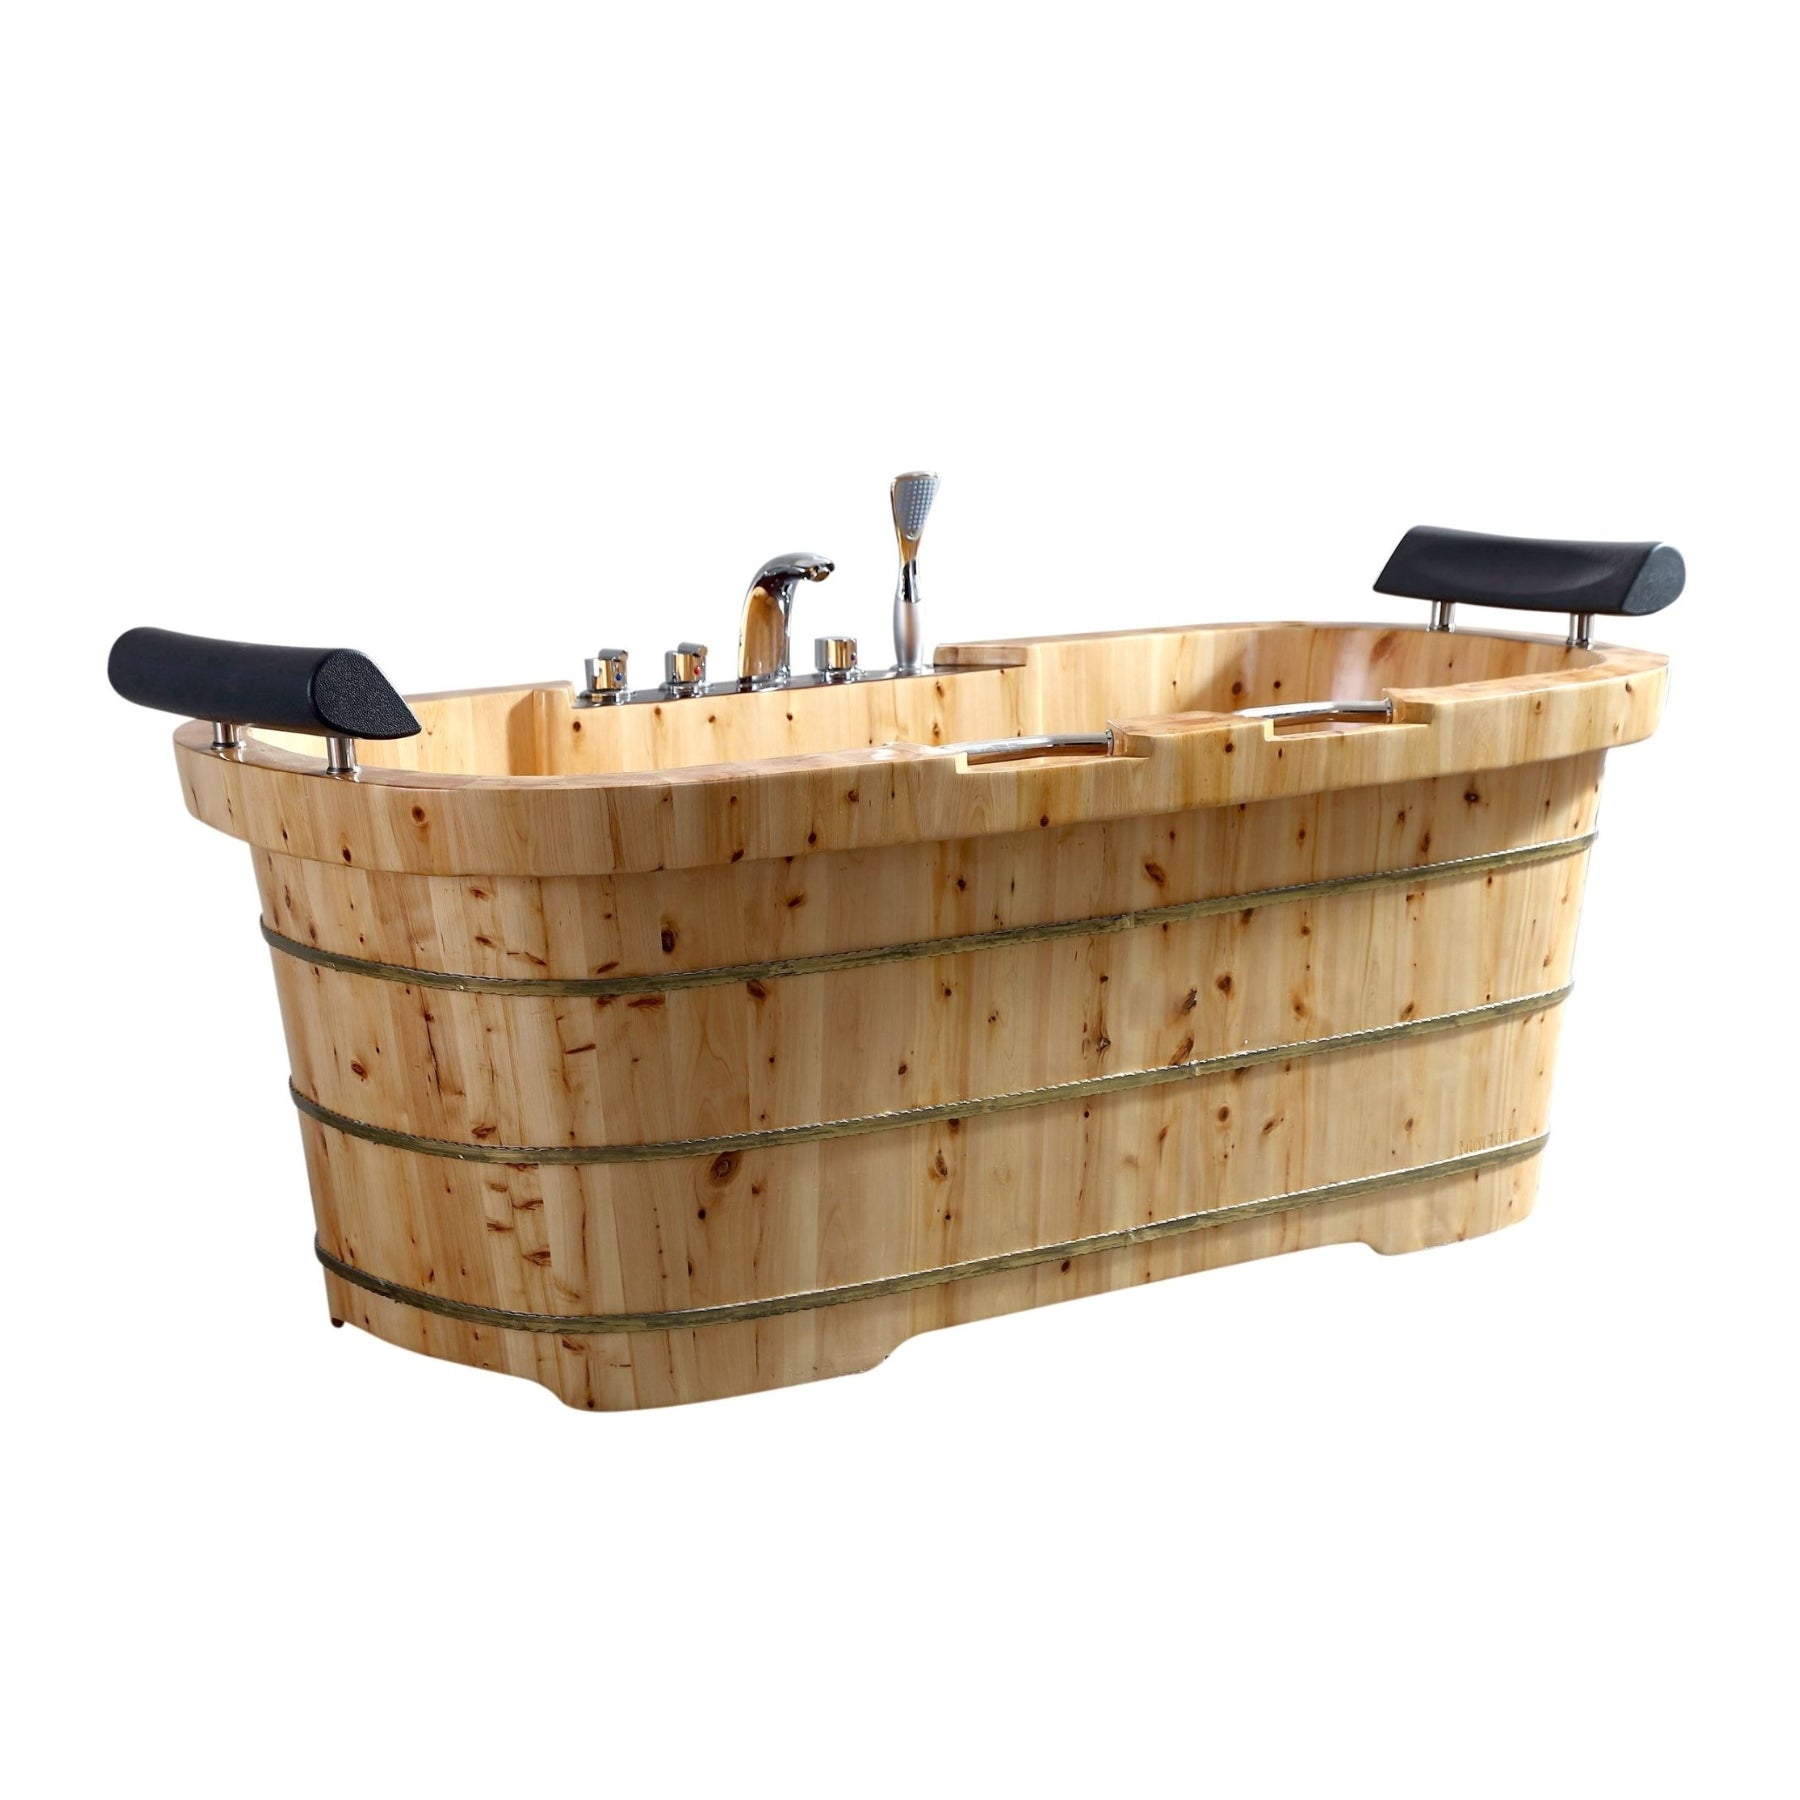 ALFI brand 2 Person Wooden Bathtub with Fixtures & Headrests - Elite Vitality